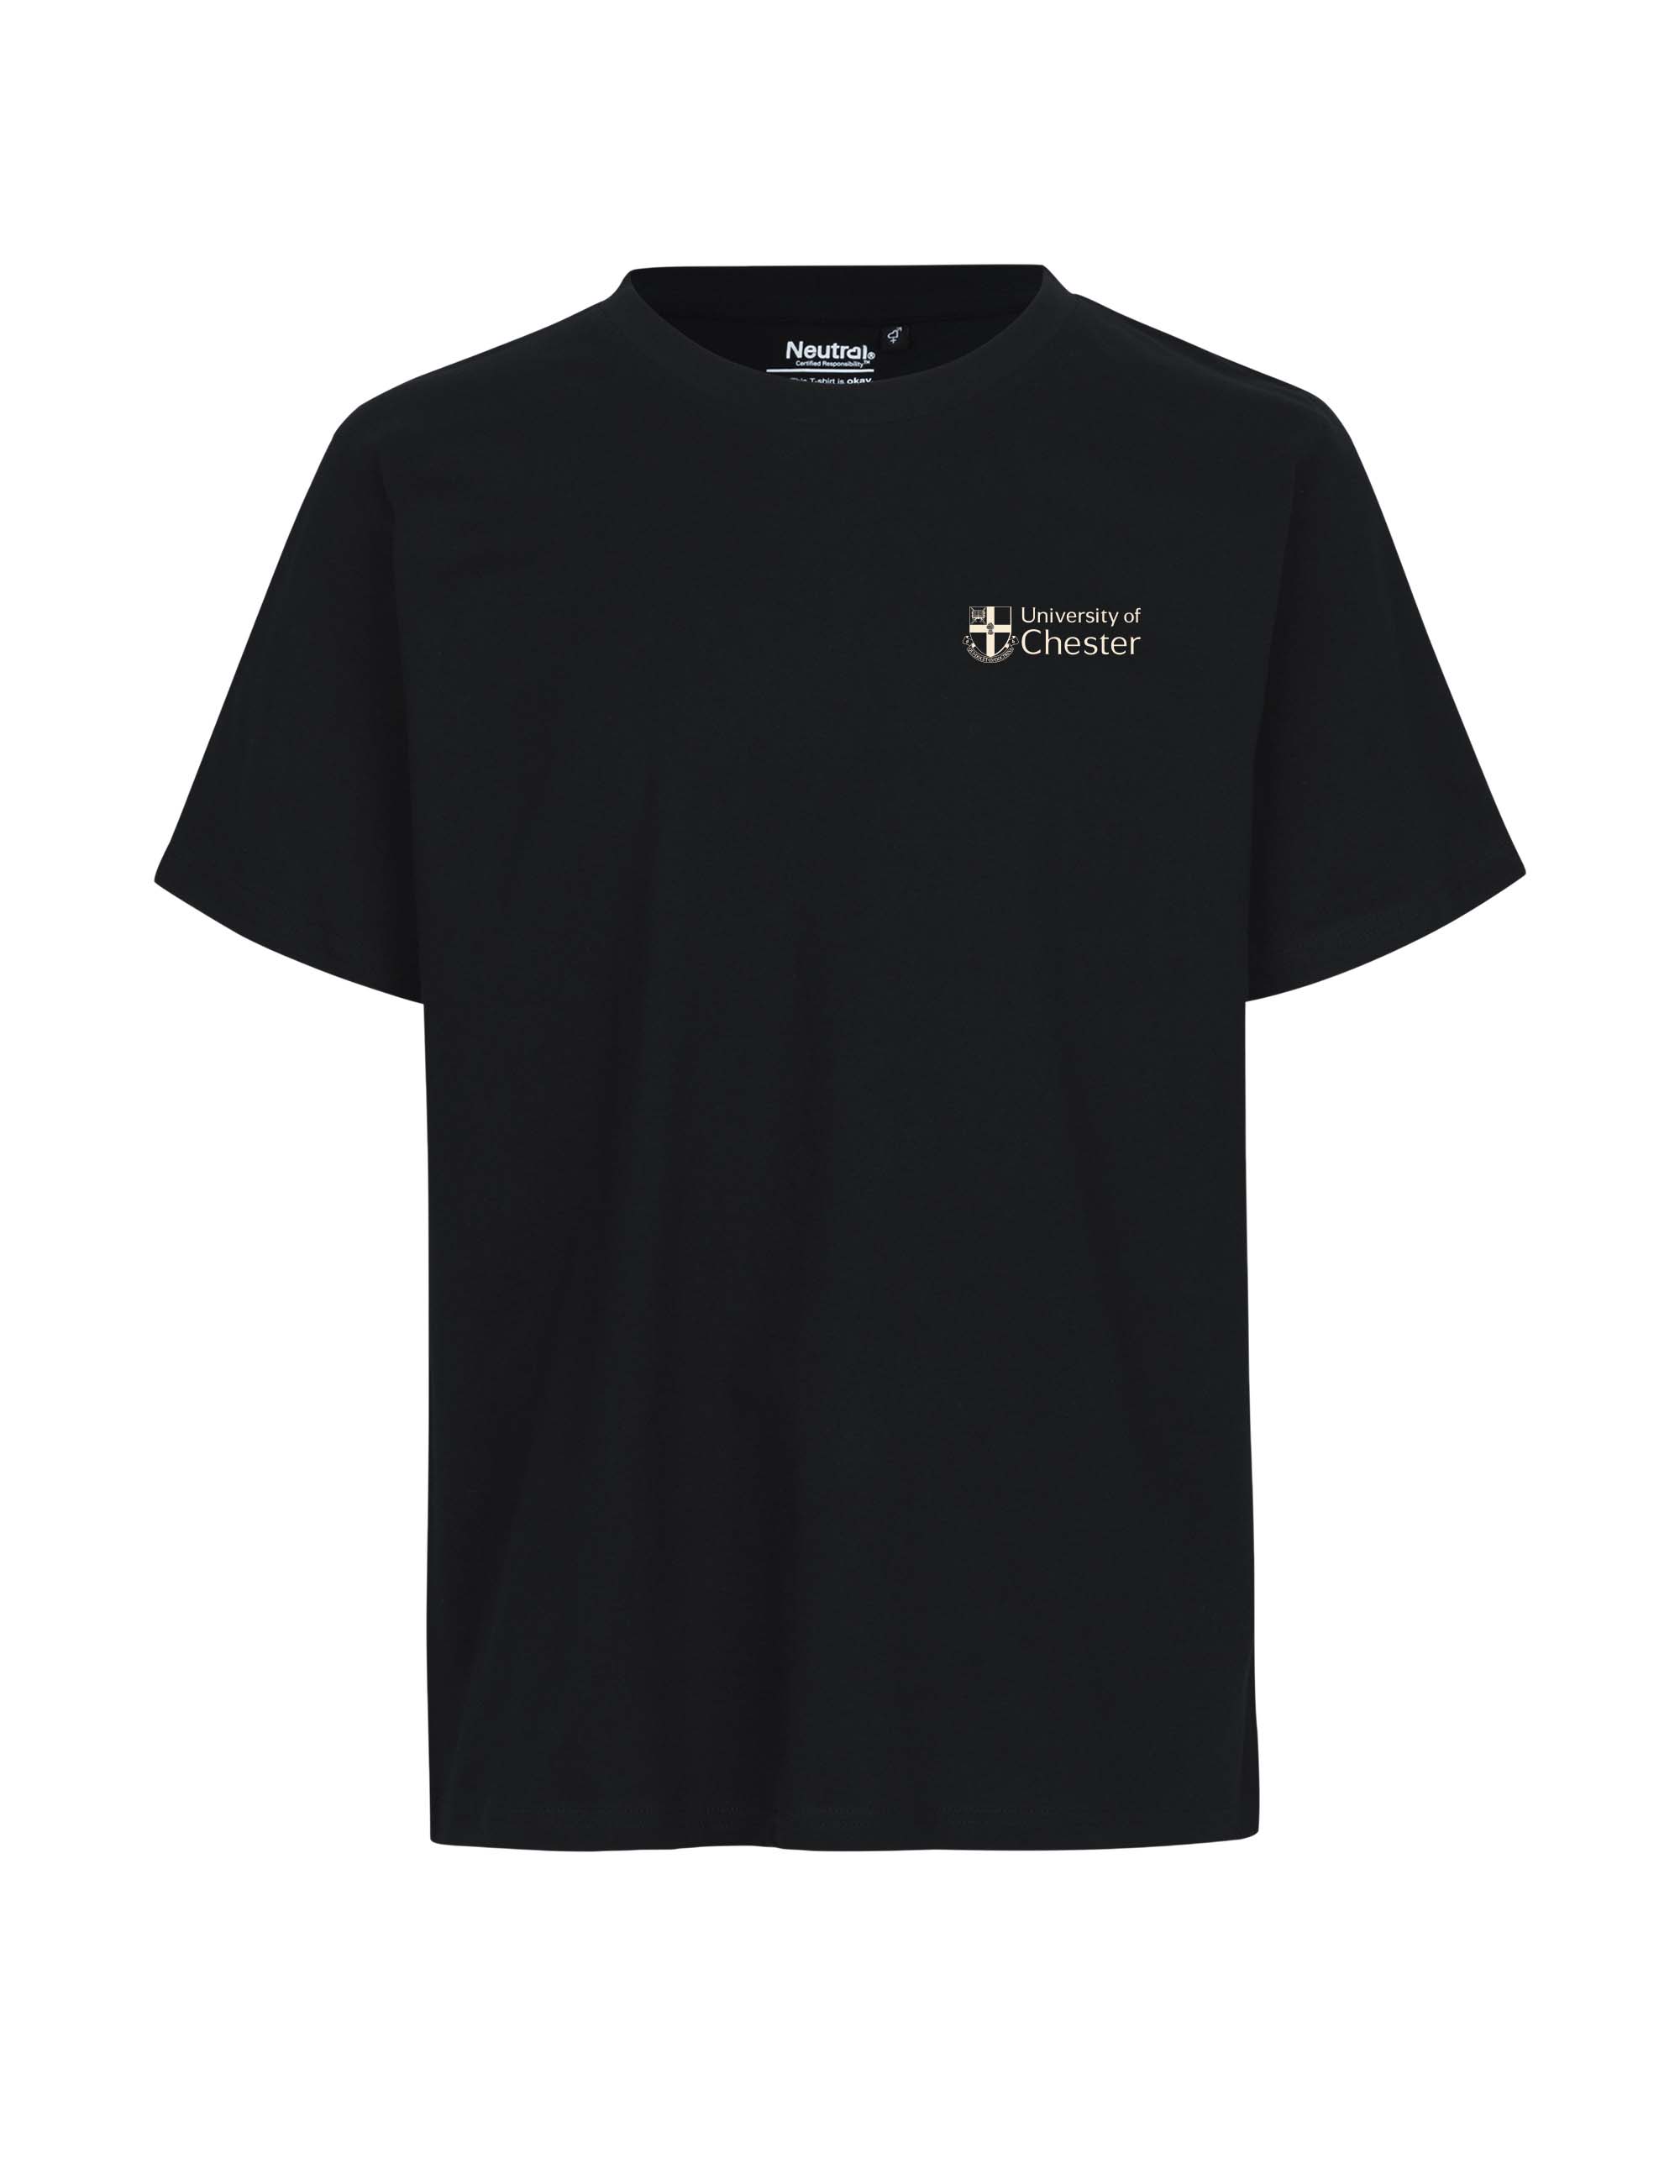 Neutral range - UoC T-Shirt - Black - S